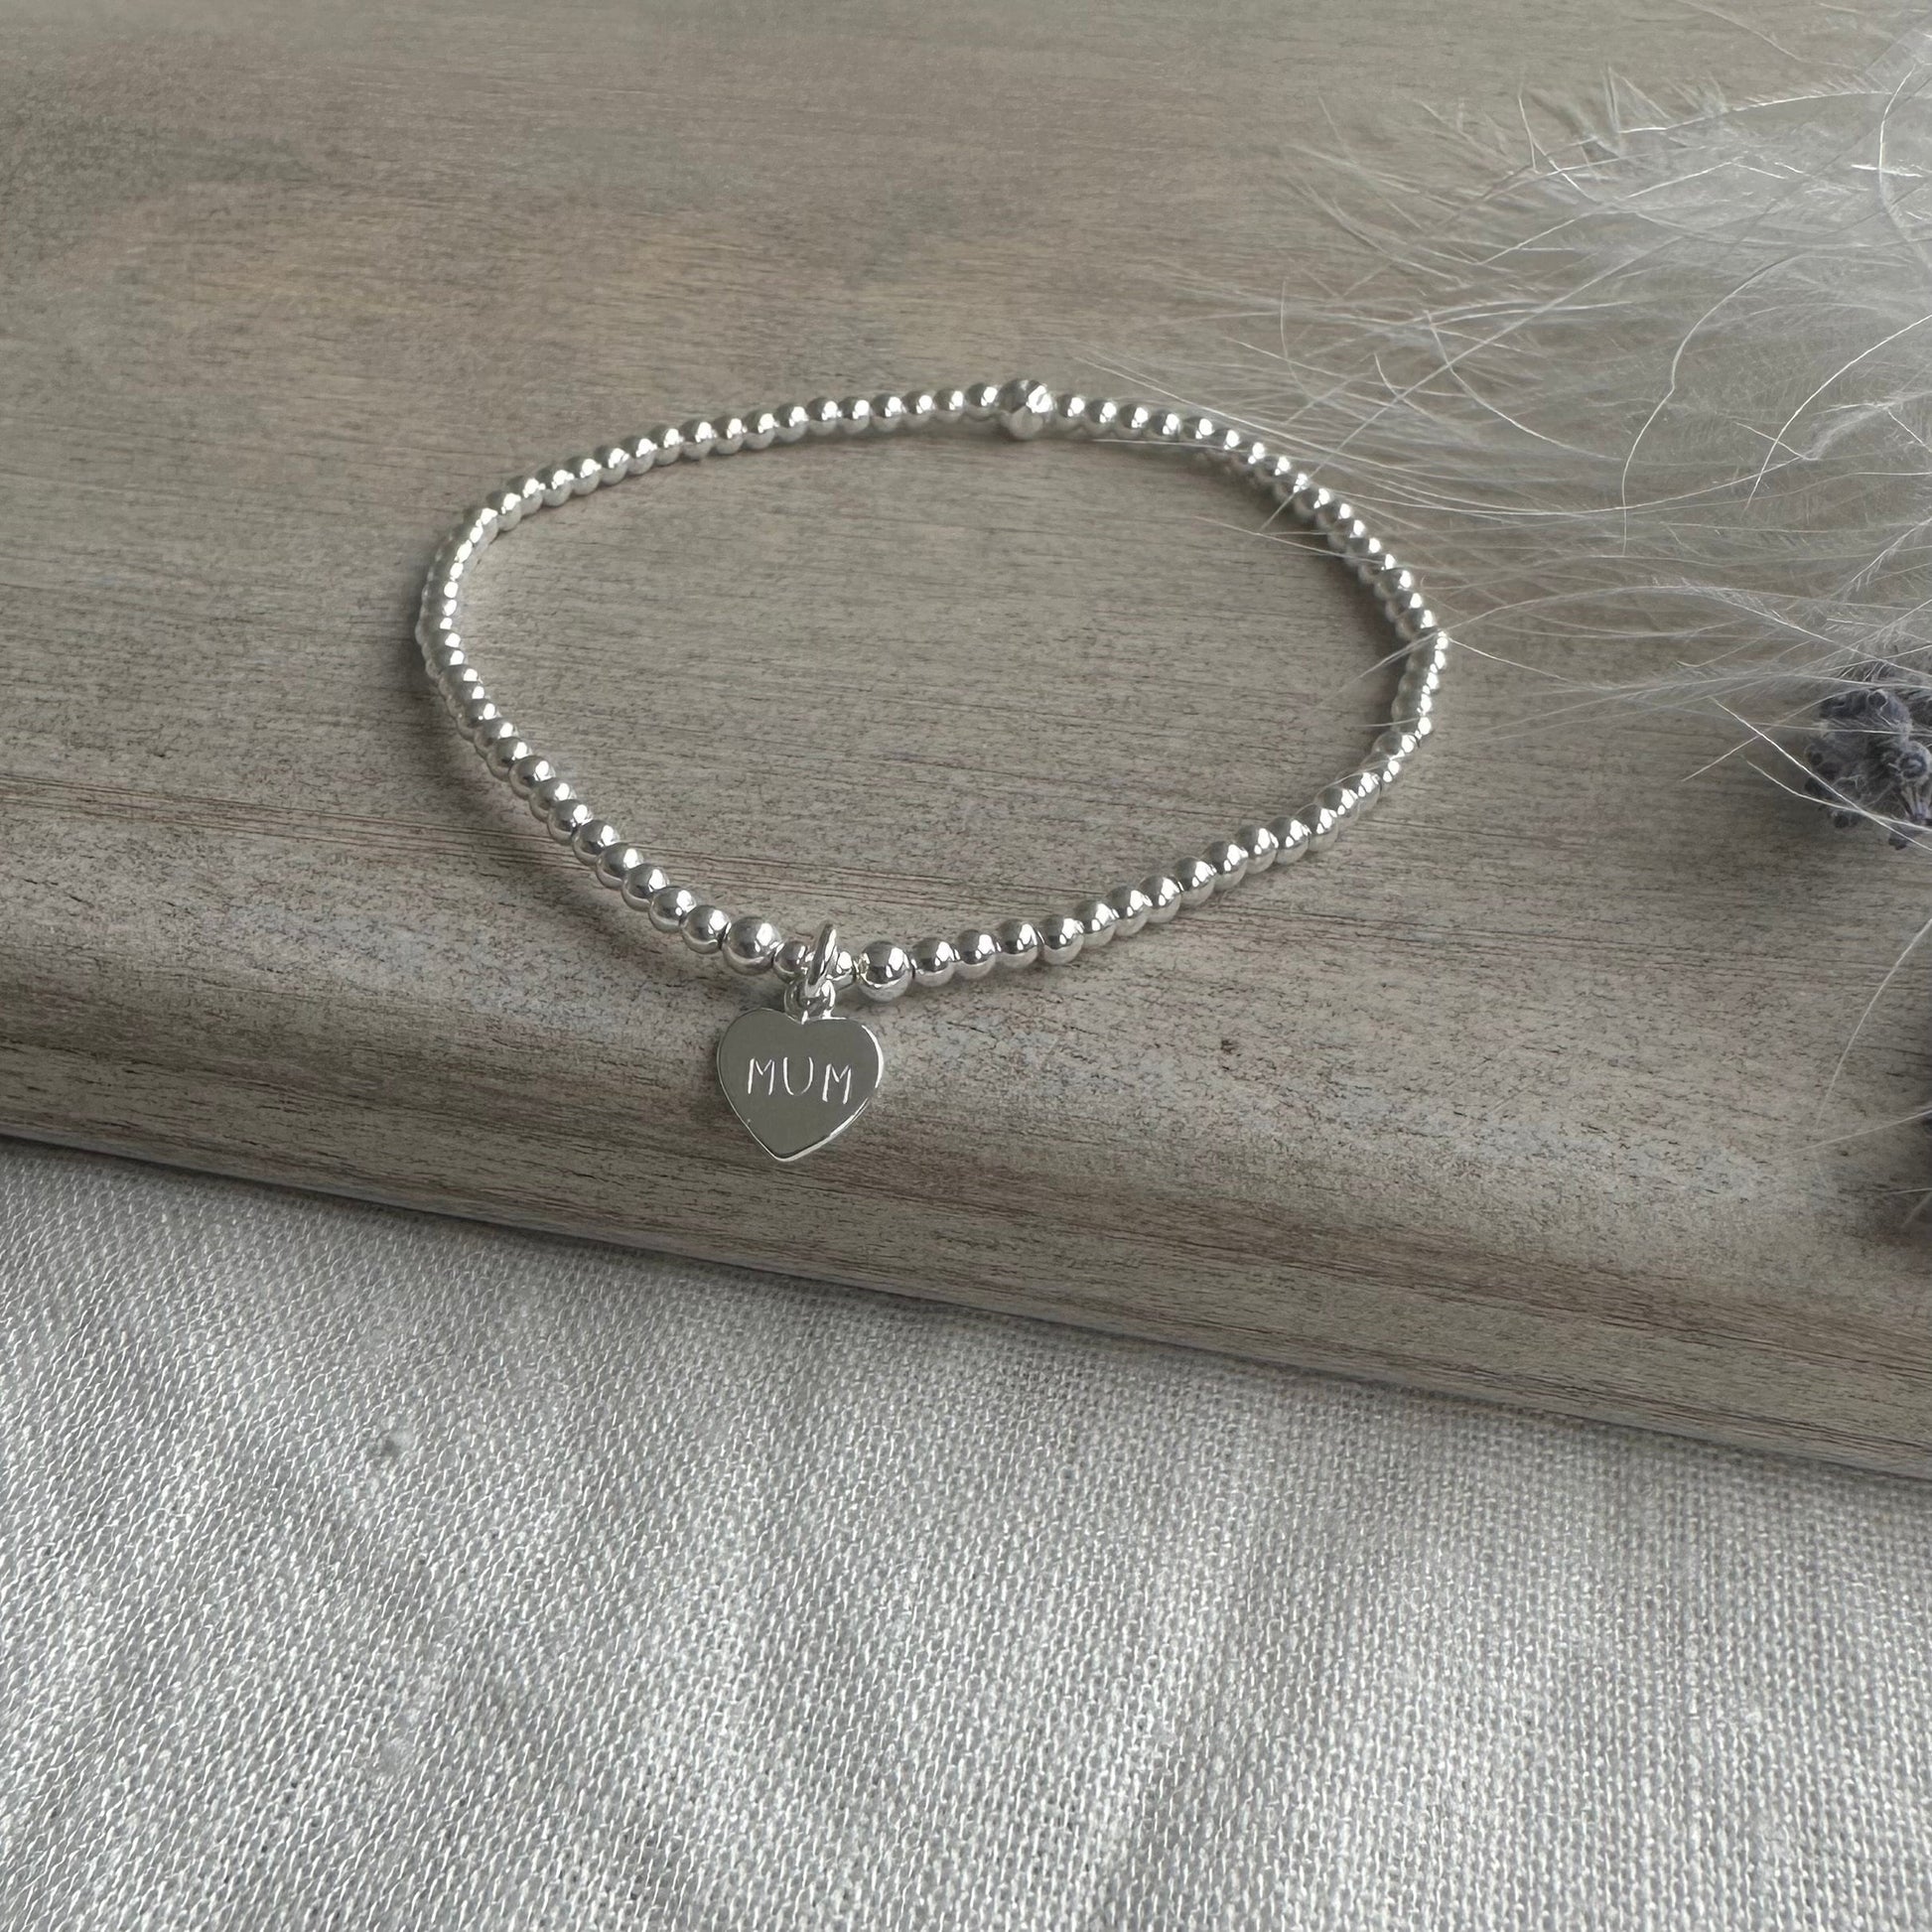 Stretch Mum Charm Bracelet, Dainty Layering Sterling Silver bracelet with mum heart